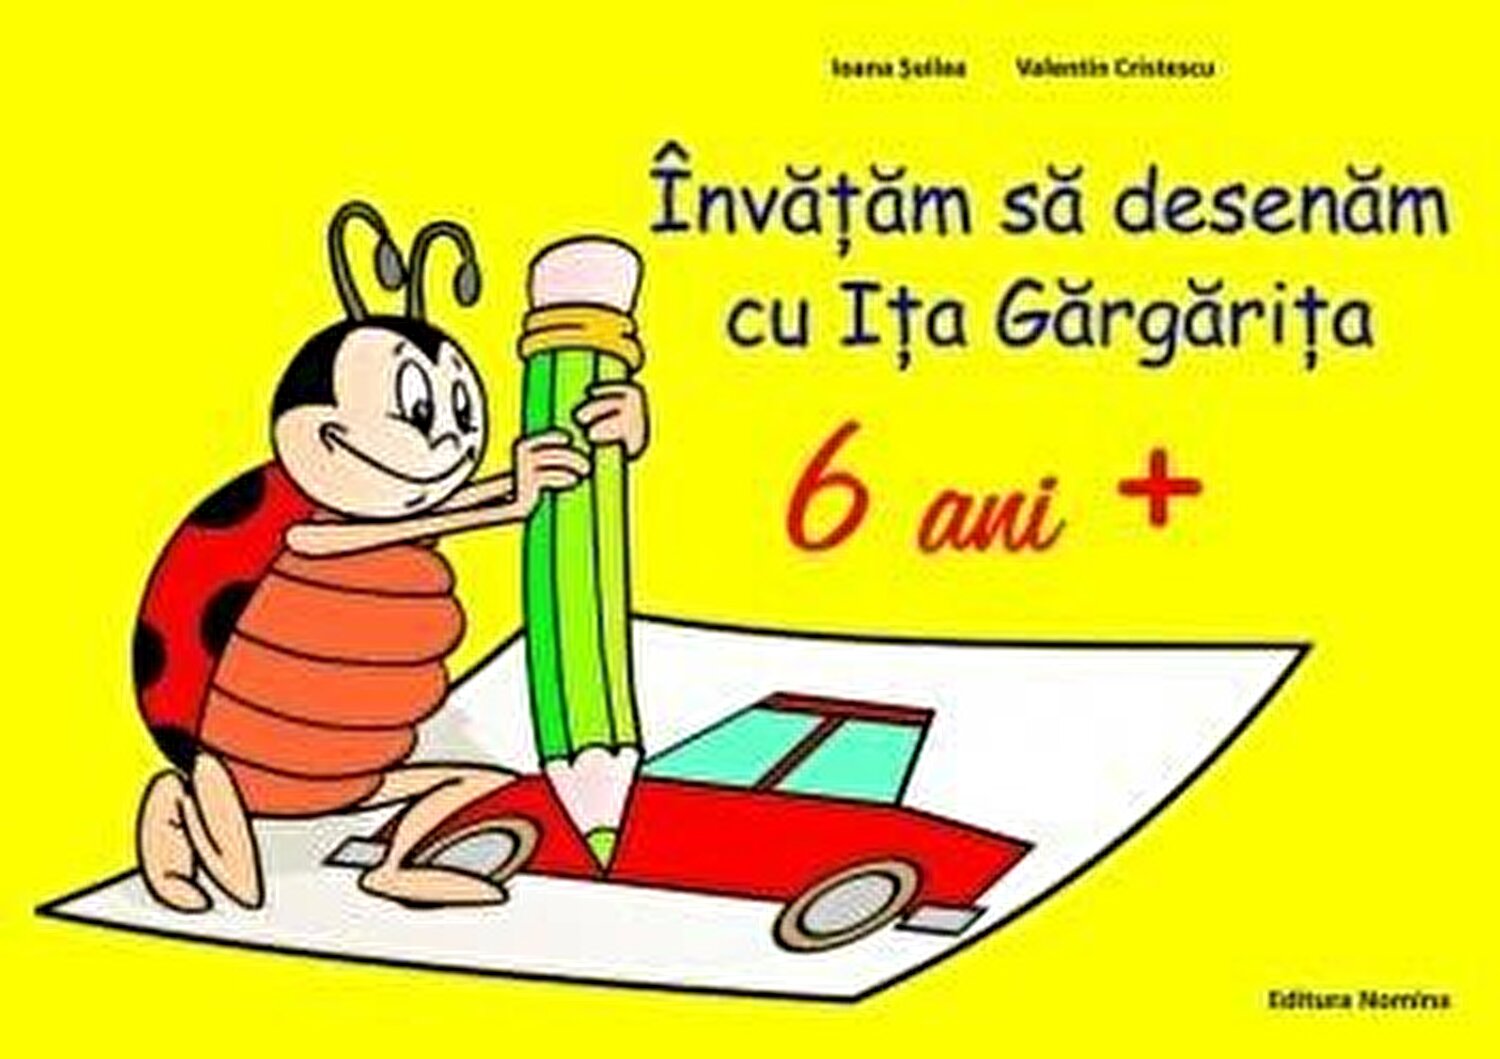 Invatam sa desenam cu Ita Gargarita 6 ani+ | Ioana Suilea carturesti.ro Carte